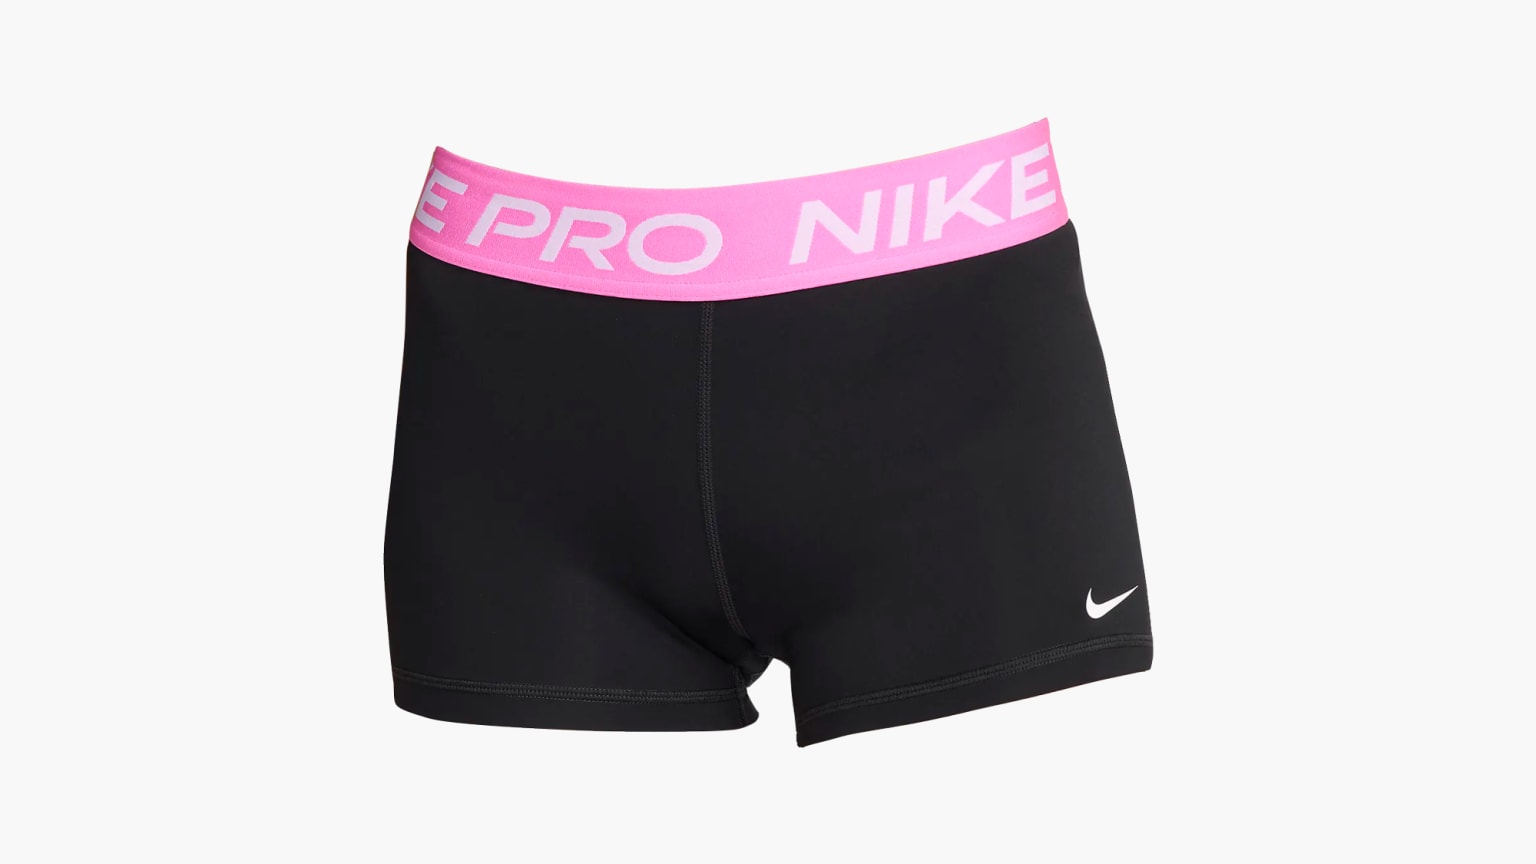 Nike Women's 3 Pro Training Shorts - Black / Playful Pink / White